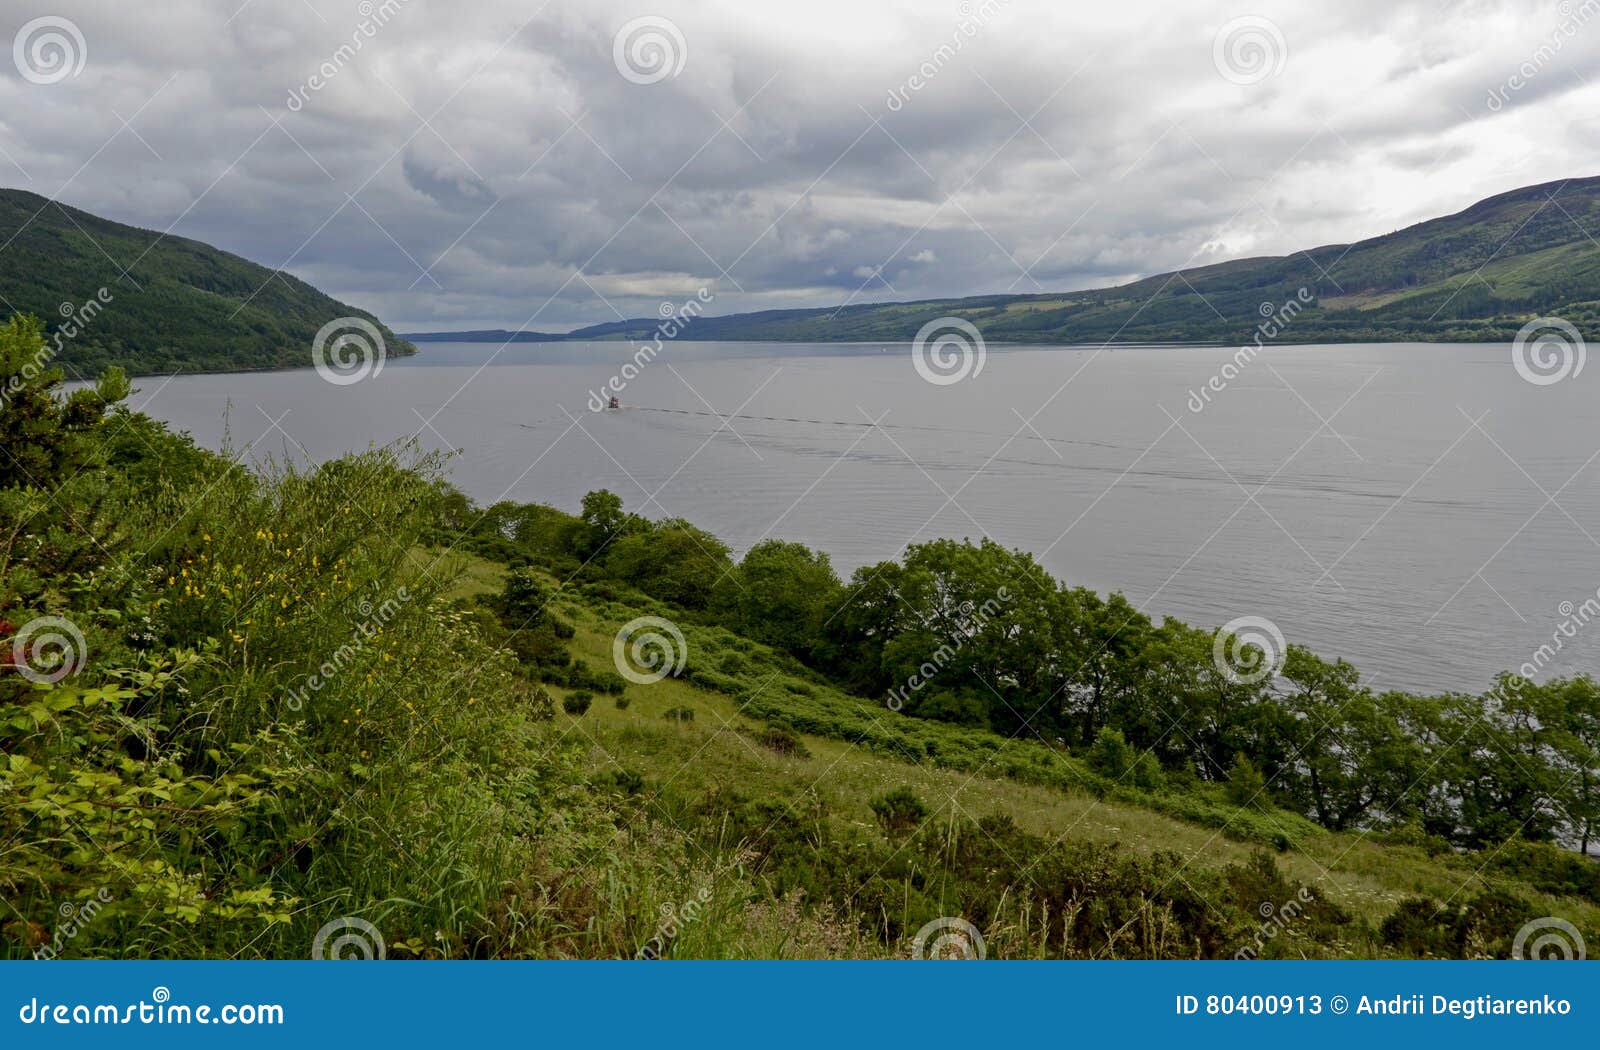 Loch Ness, Scotland, United Kingdom Stock Image - Image of britain ...